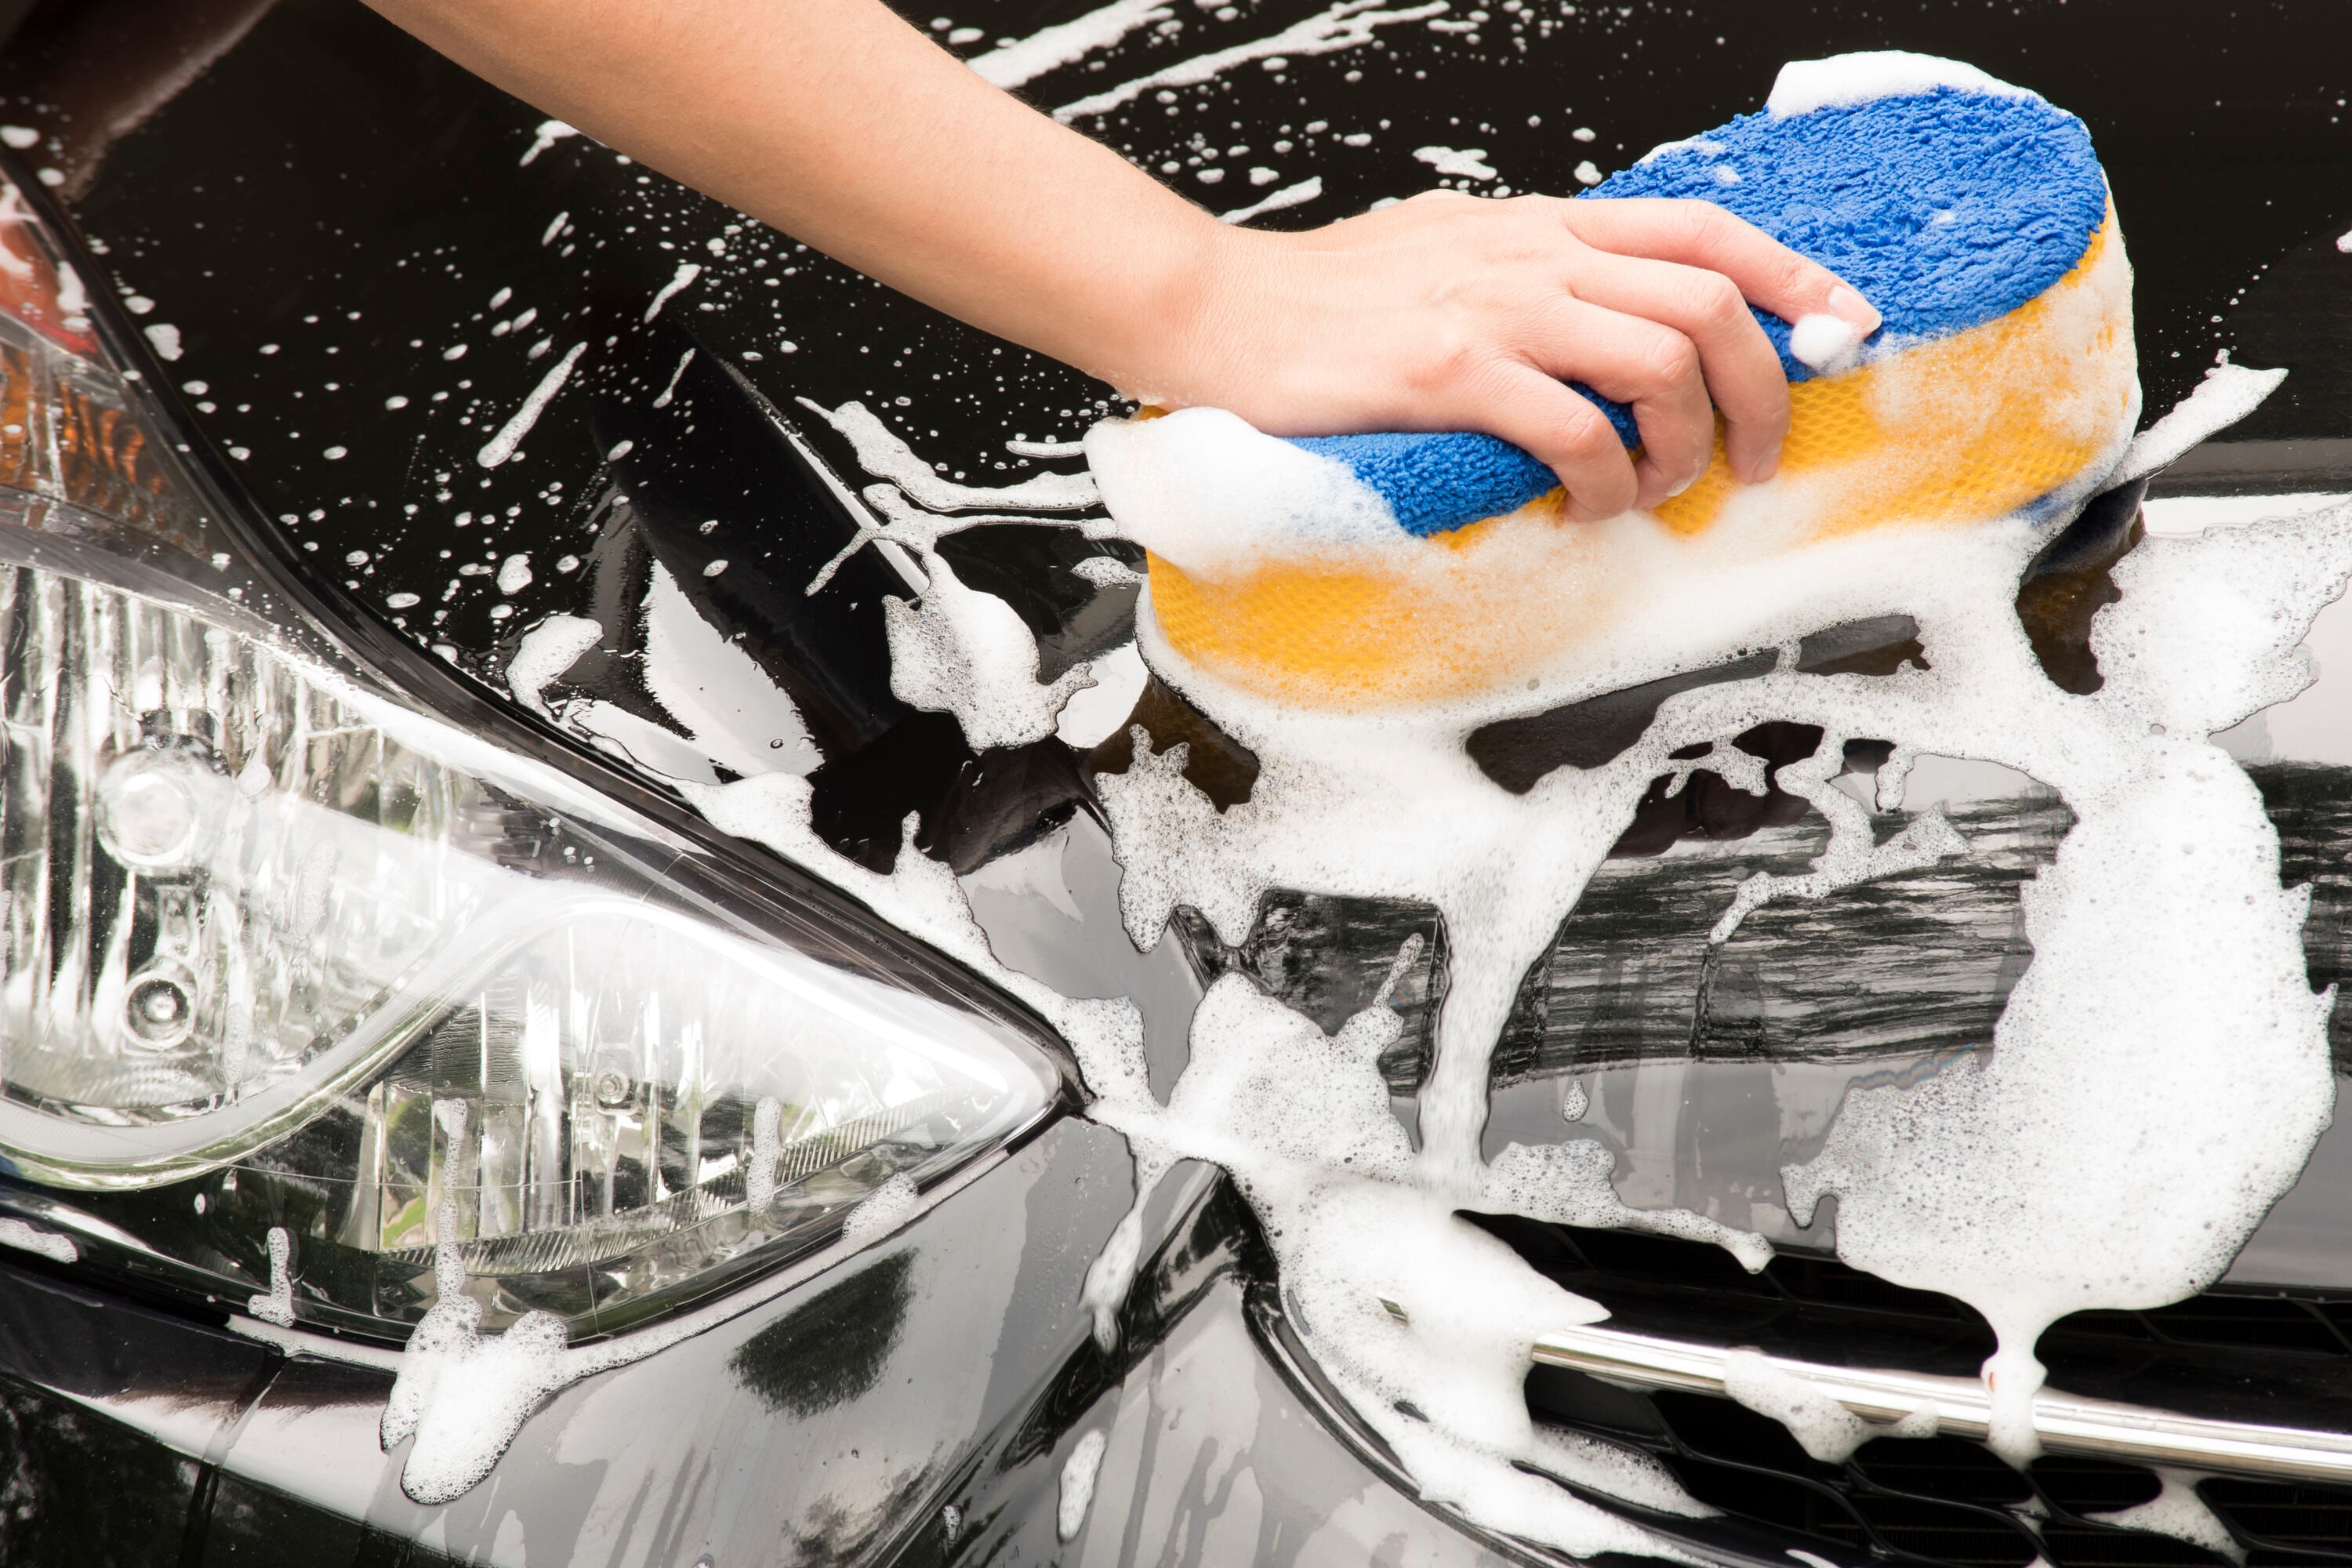 Rain-X Spot Free car wash 48-fl oz Car Exterior Wash in the Car Exterior  Cleaners department at